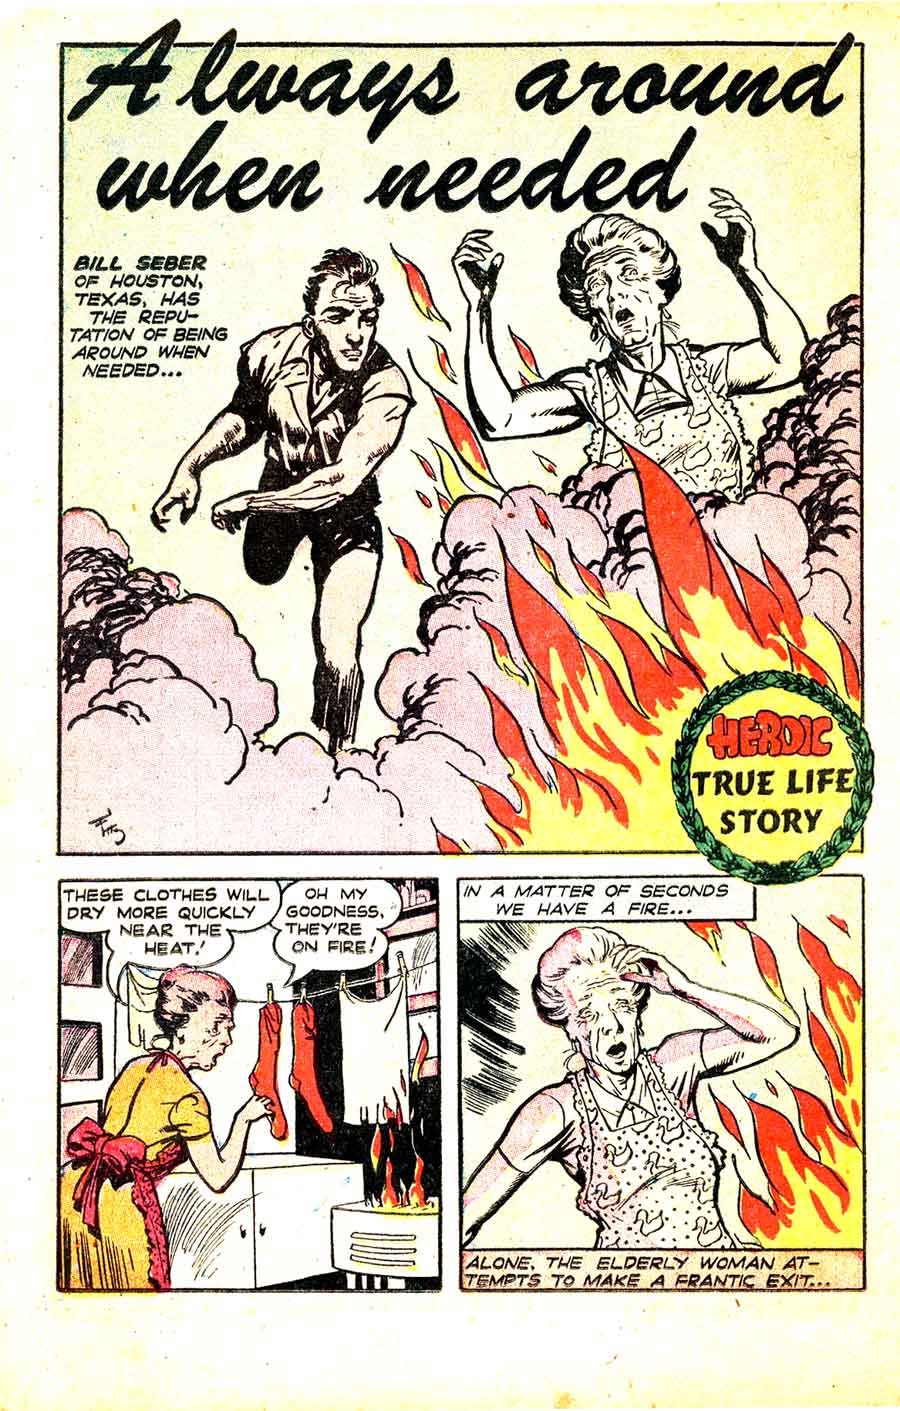 Heroic Comics #70 golden age 1950s comic book page art by Frank Frazetta